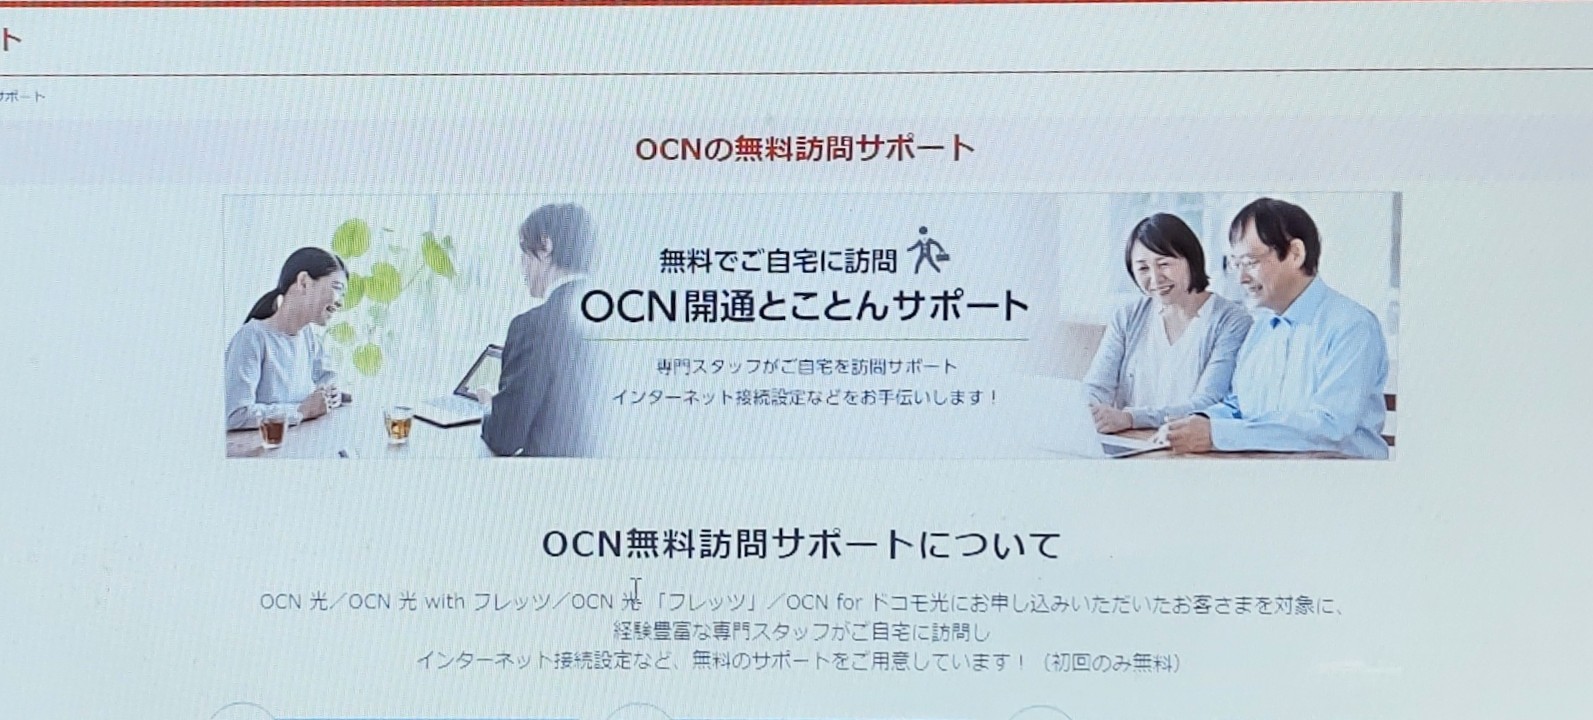 OCN訪問初回無料